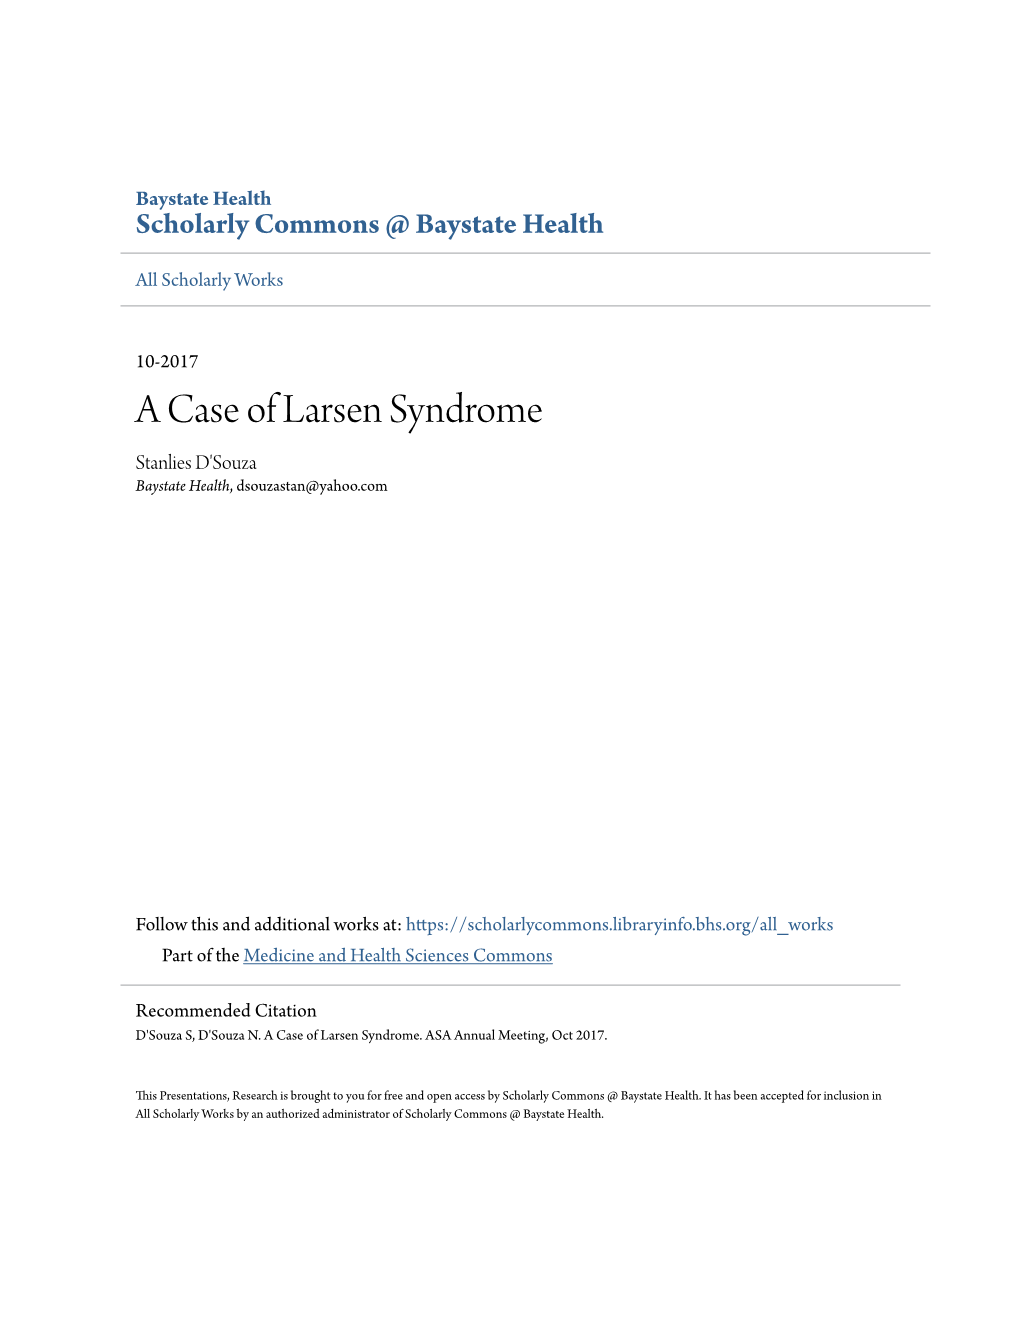 A Case of Larsen Syndrome Stanlies D'souza Baystate Health, Dsouzastan@Yahoo.Com